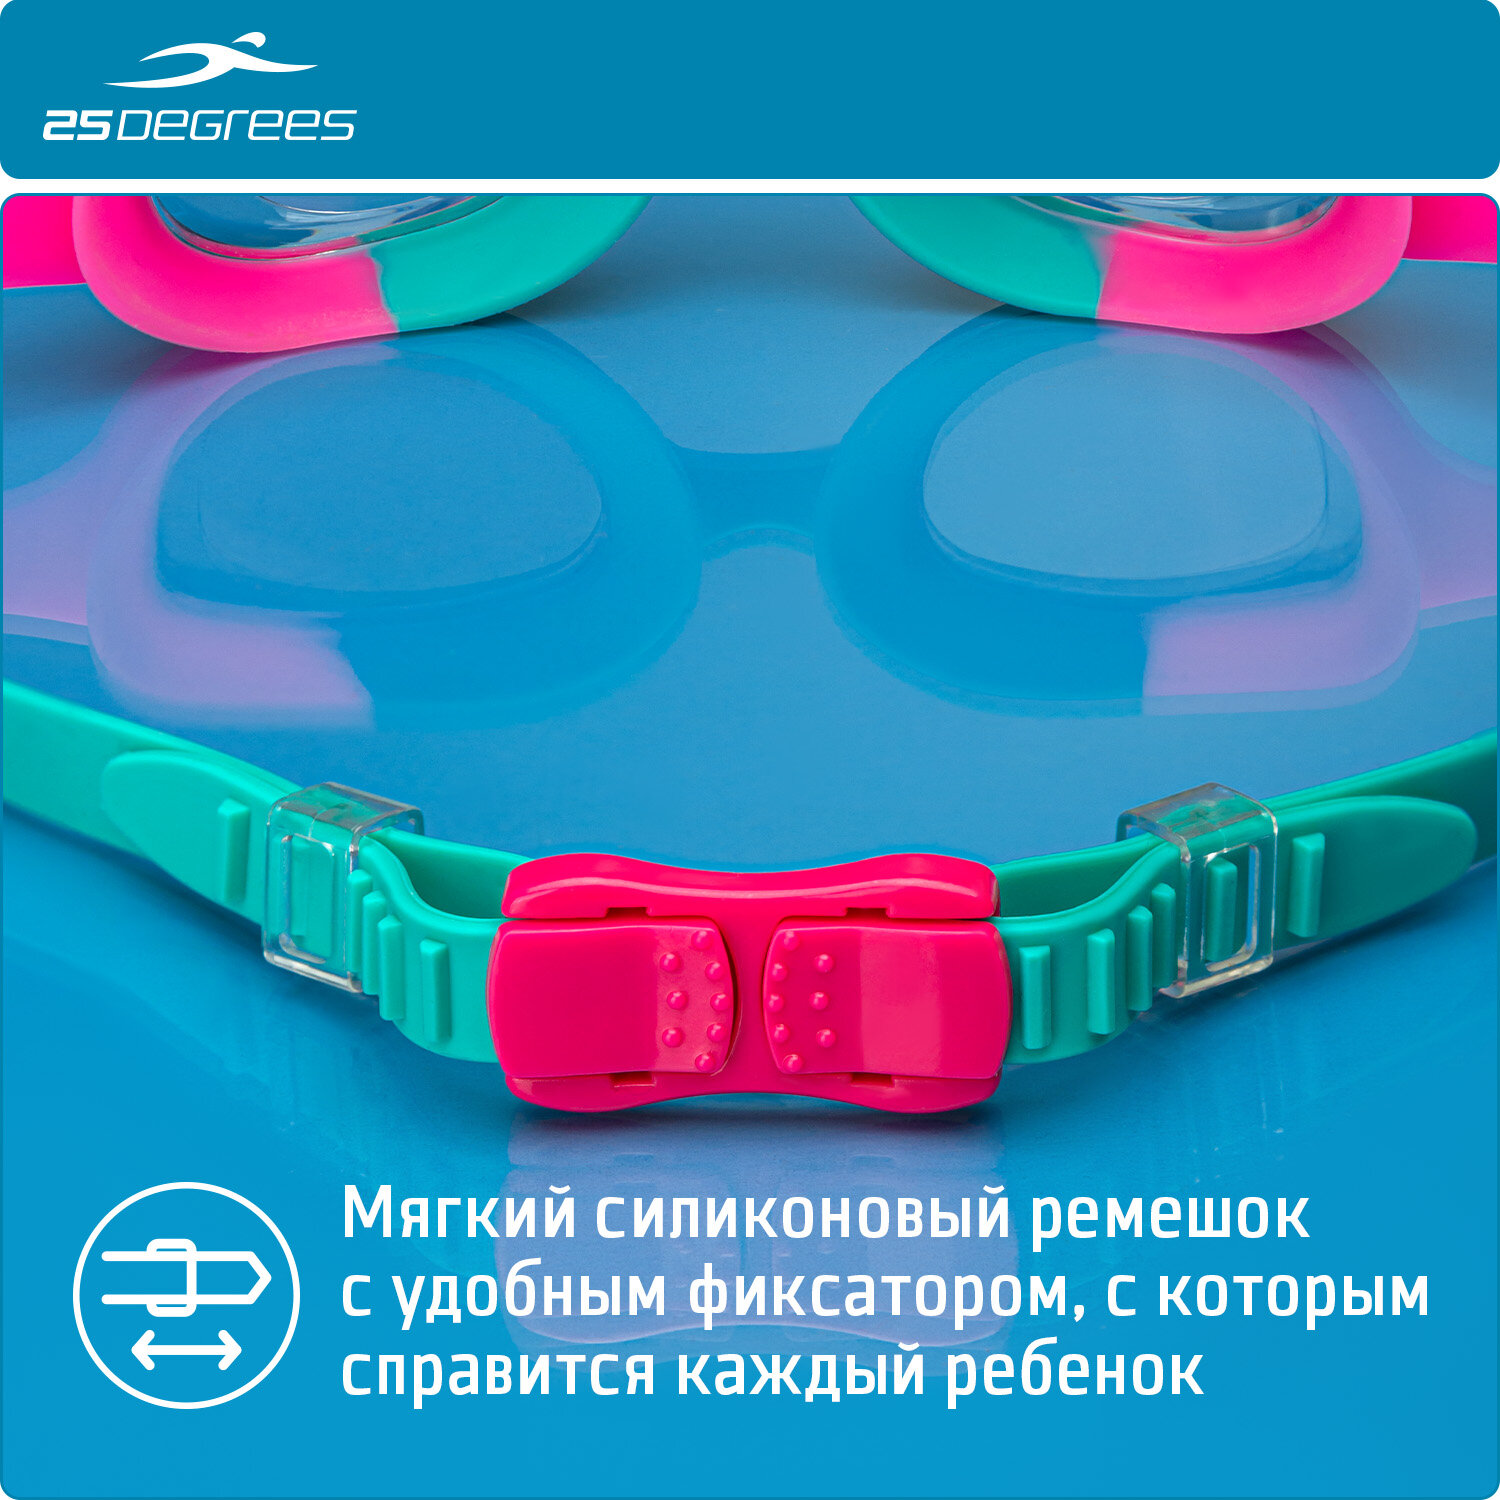 Очки для плавания детские 25DEGREES Dory Pink/Turquoise футляр в комплекте, цвет розовый/бирюзовый